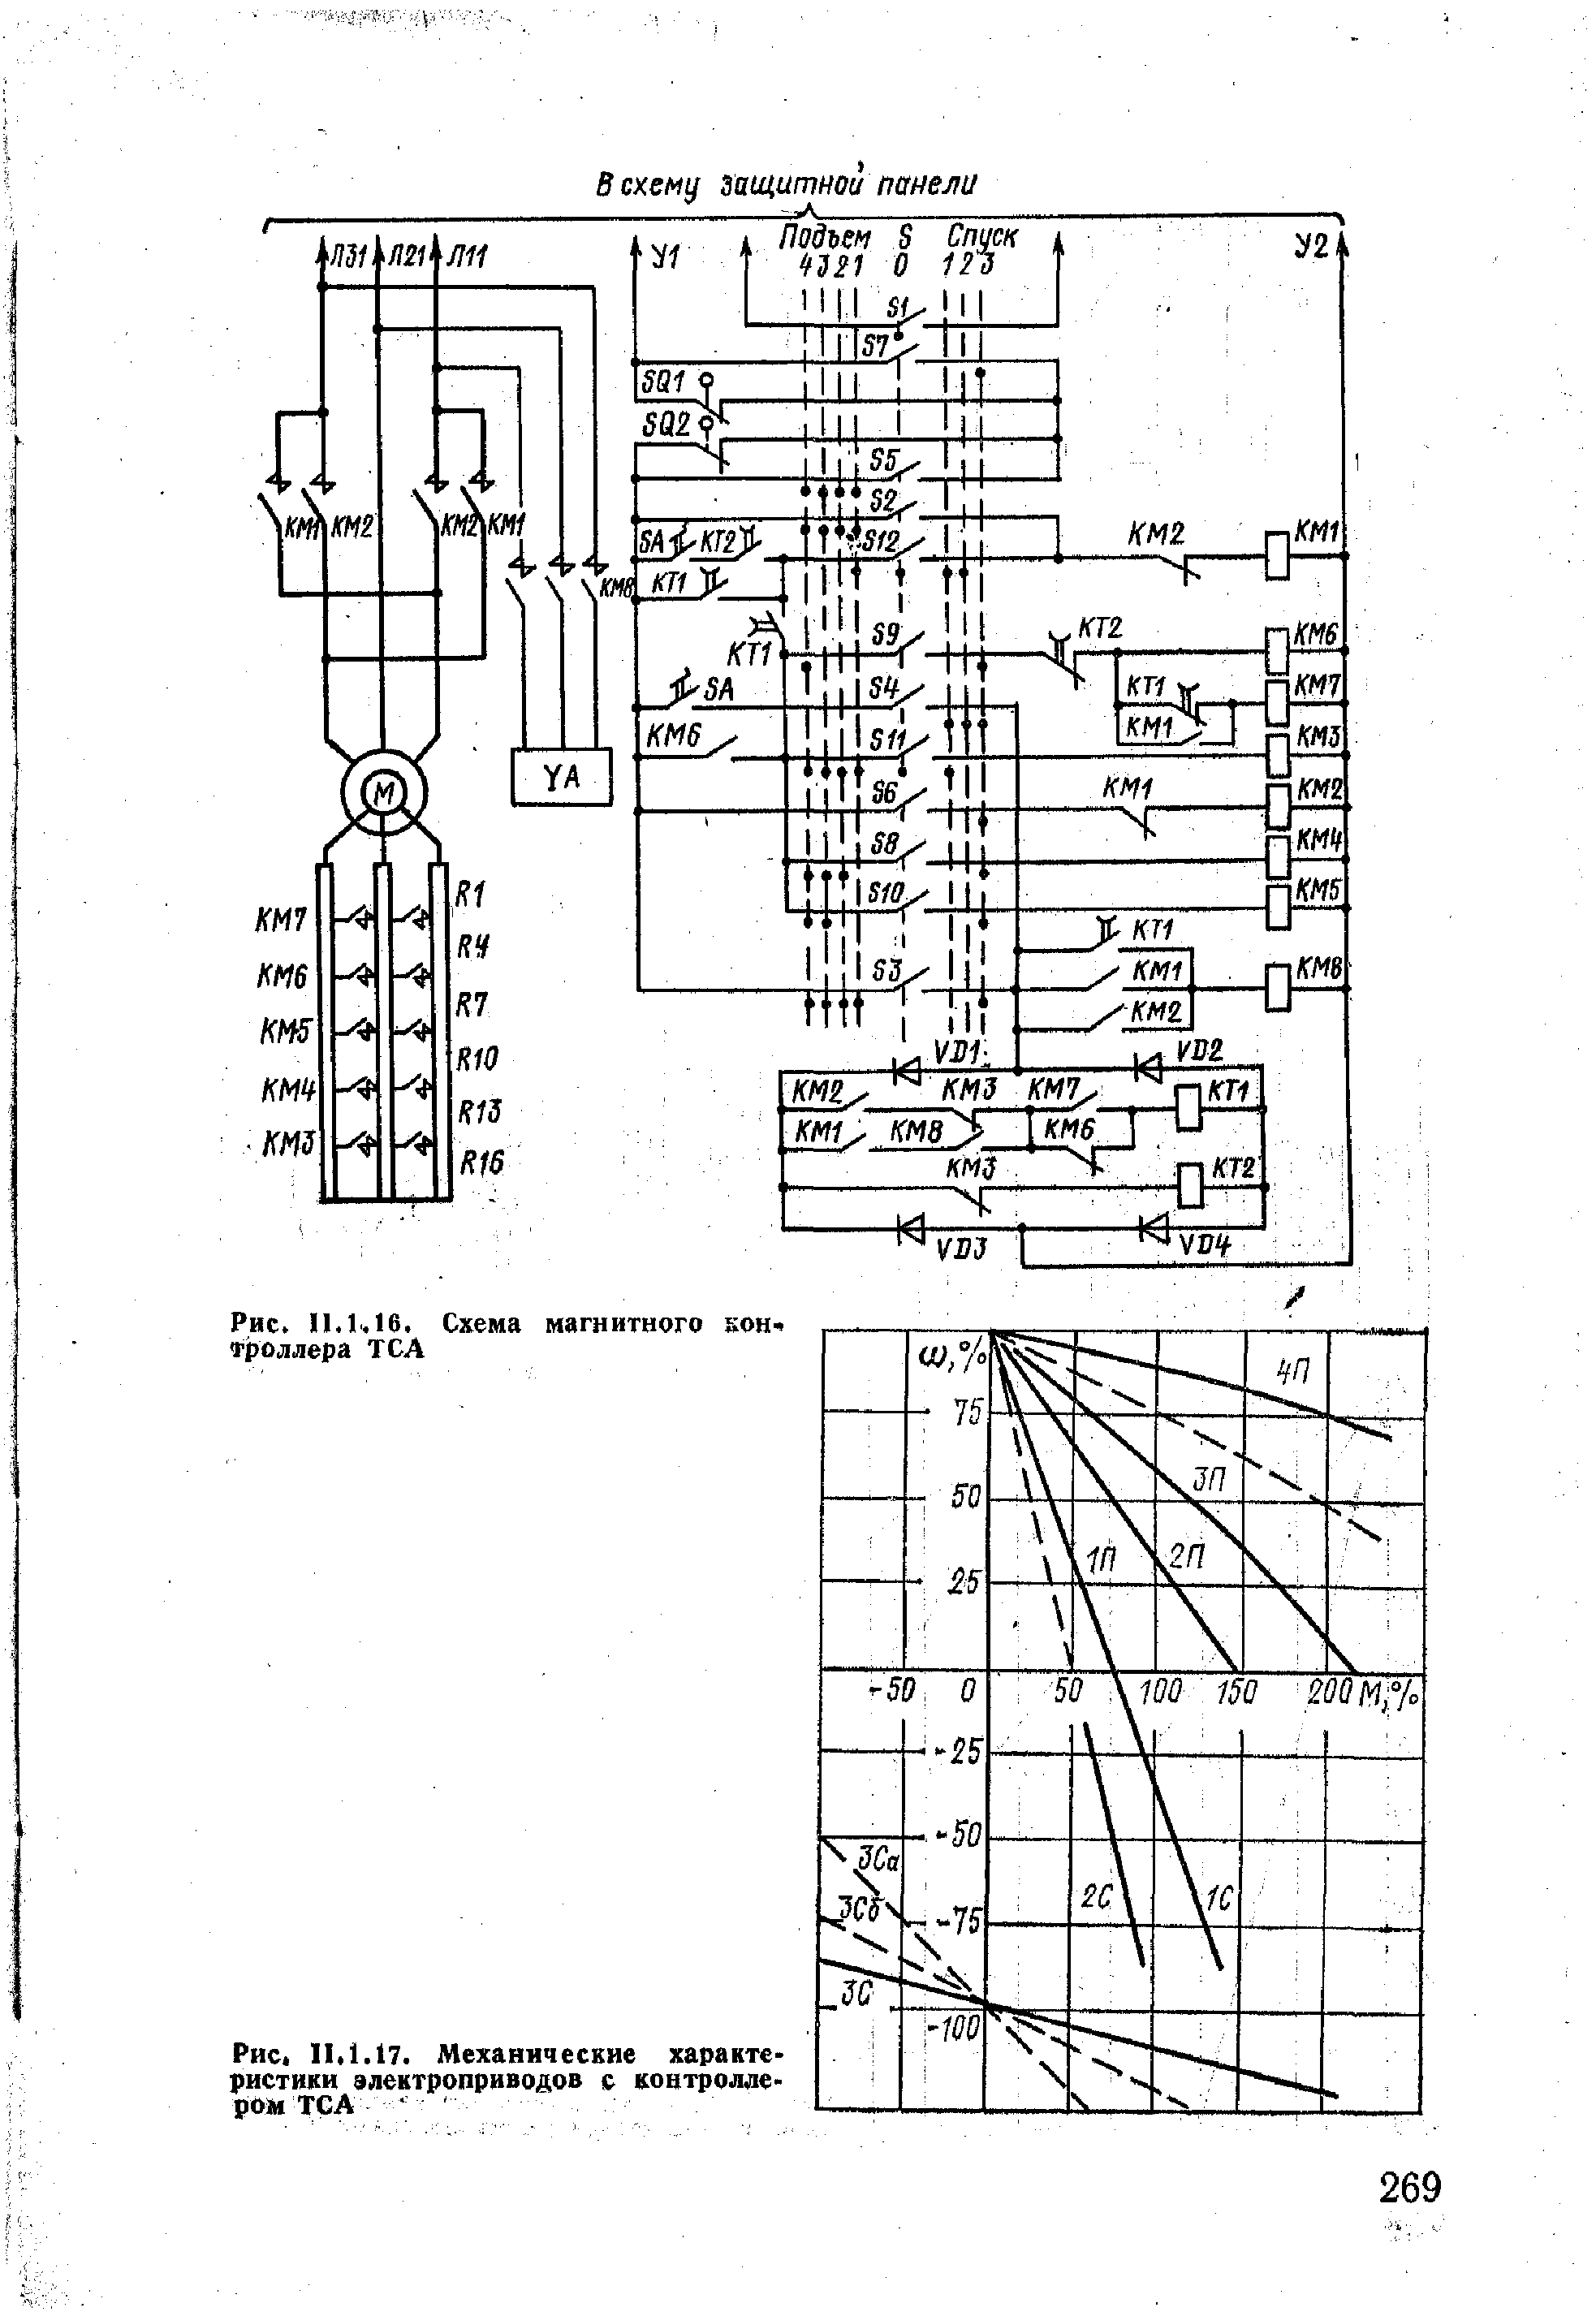 Рис. ПЛ. 16. Схема магнитного контроллера ТСА
